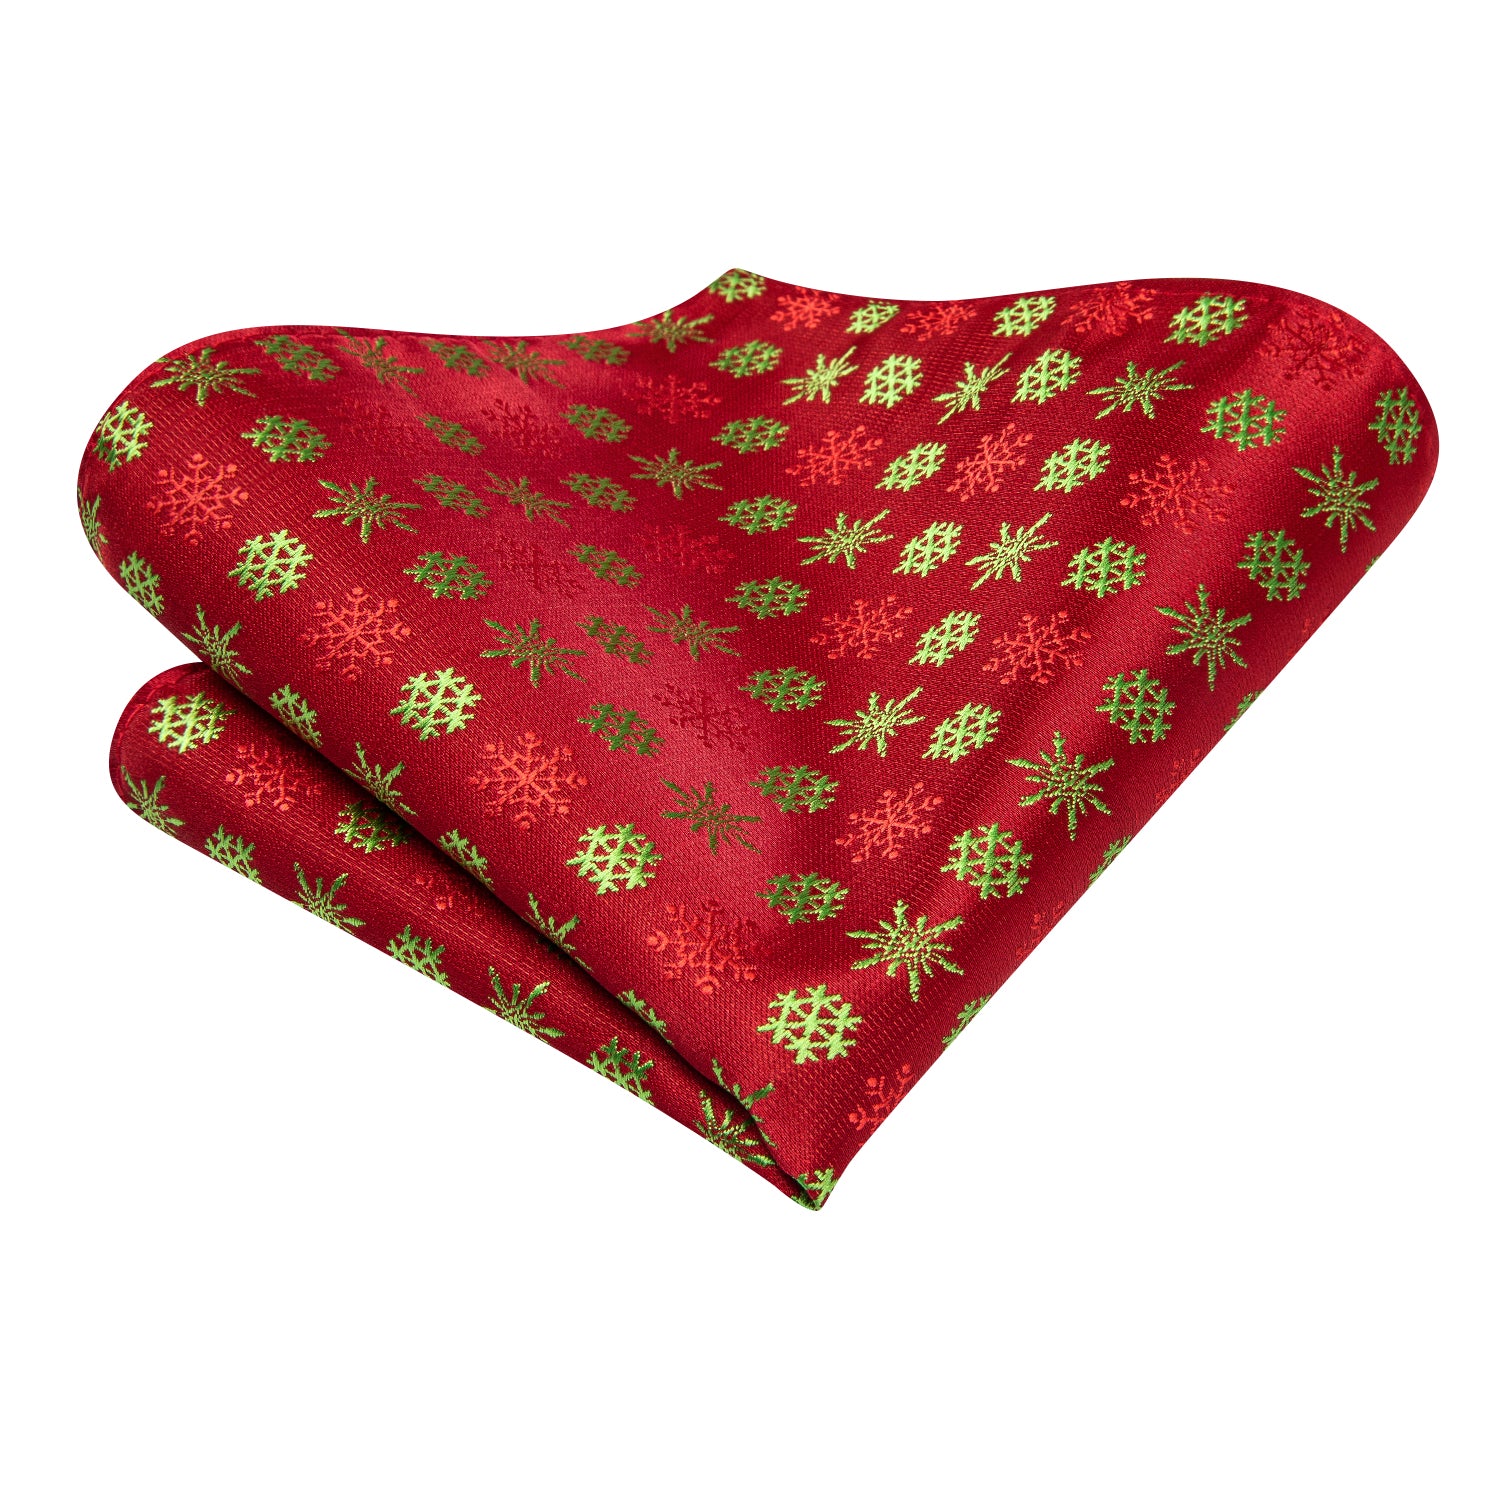 Red Green Christmas Snowflakes Self-tied Bow Tie Hanky Cufflinks Set